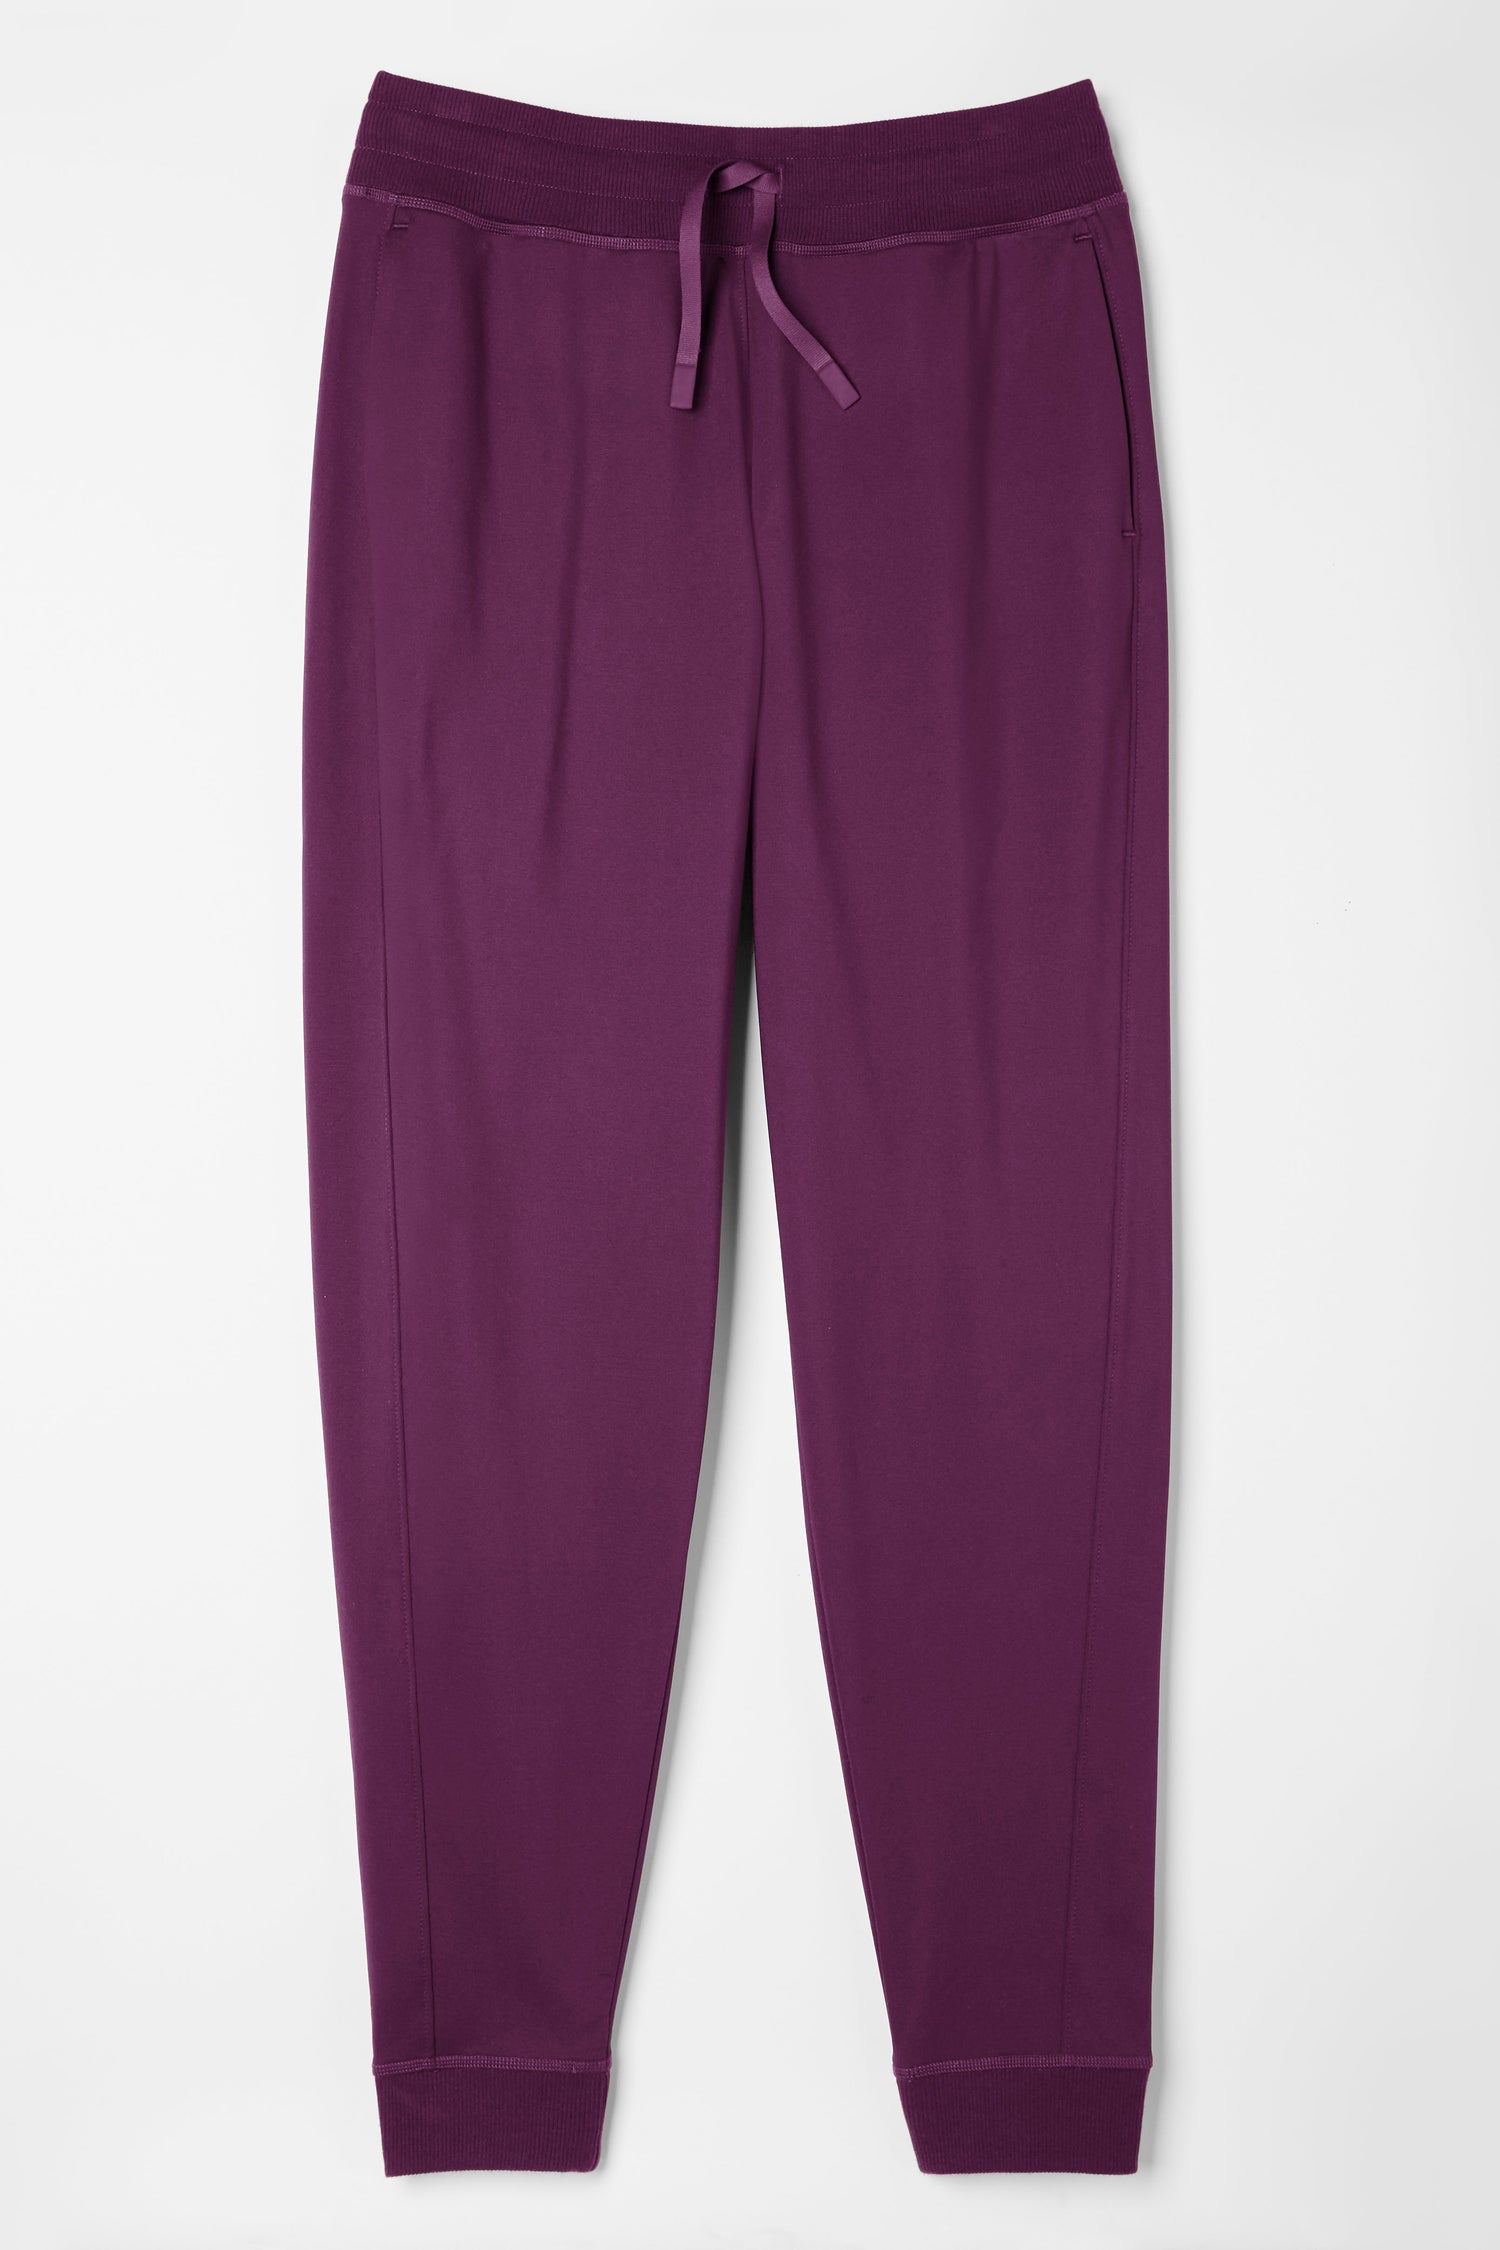 Best Friend Sweatpants for 2 Teen Girls Matching BFF Pants for Women  Drawstring Lounge Bottoms Sports Pants